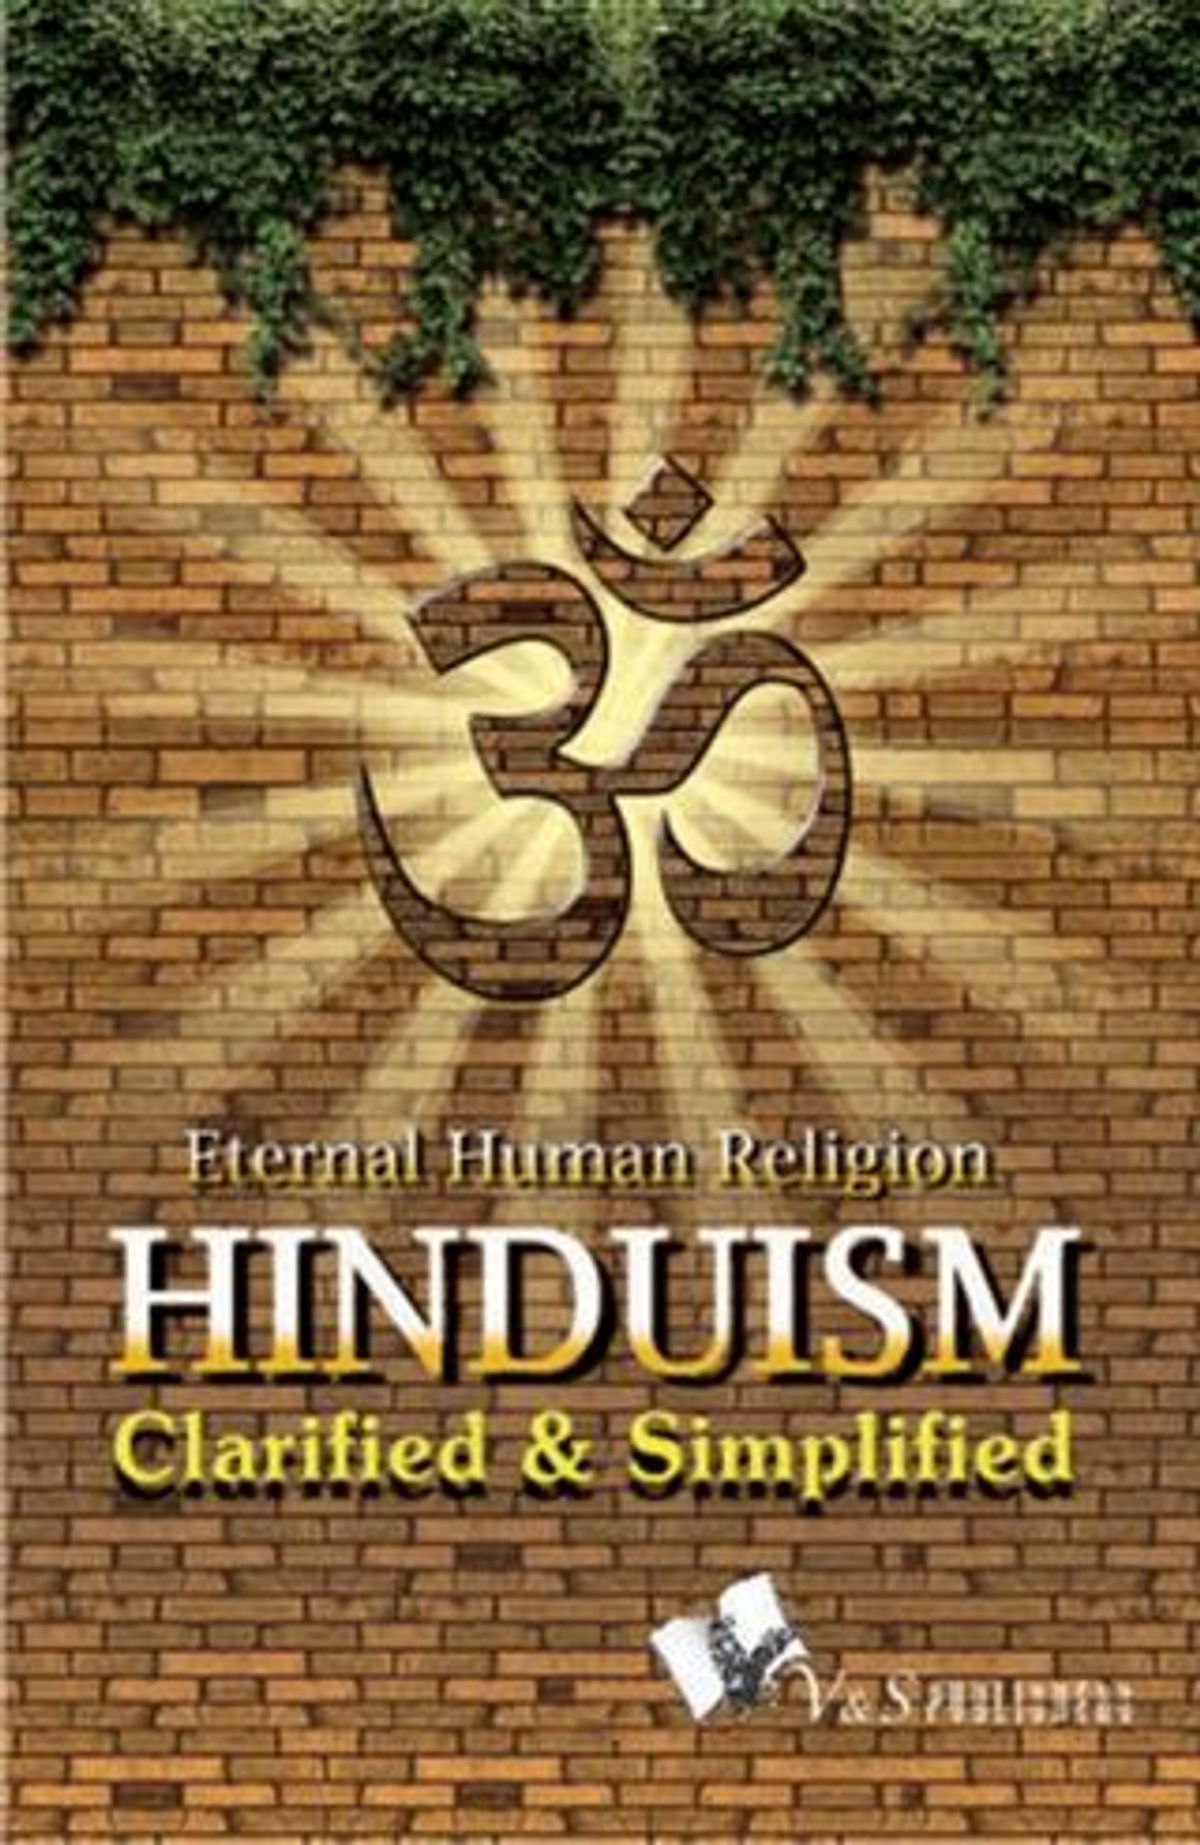 Hinduism: Clarified & Simplified